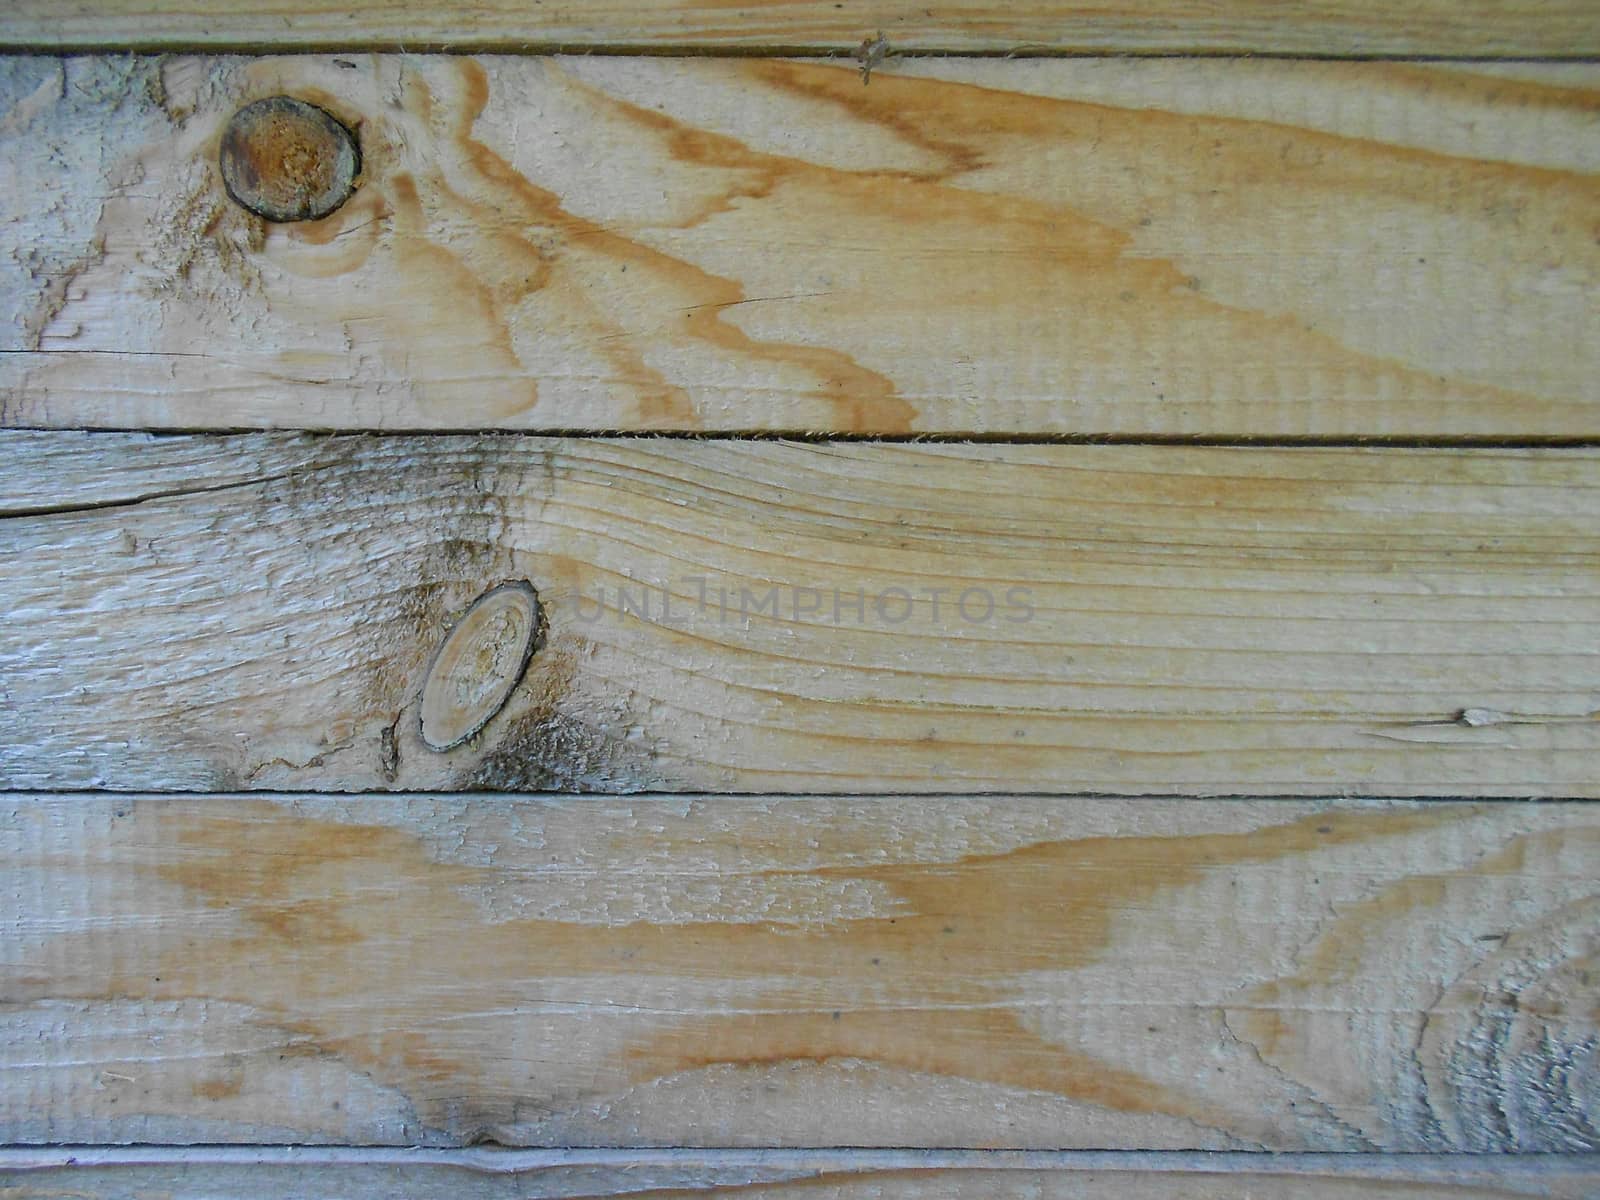 Wood Texture by xizang